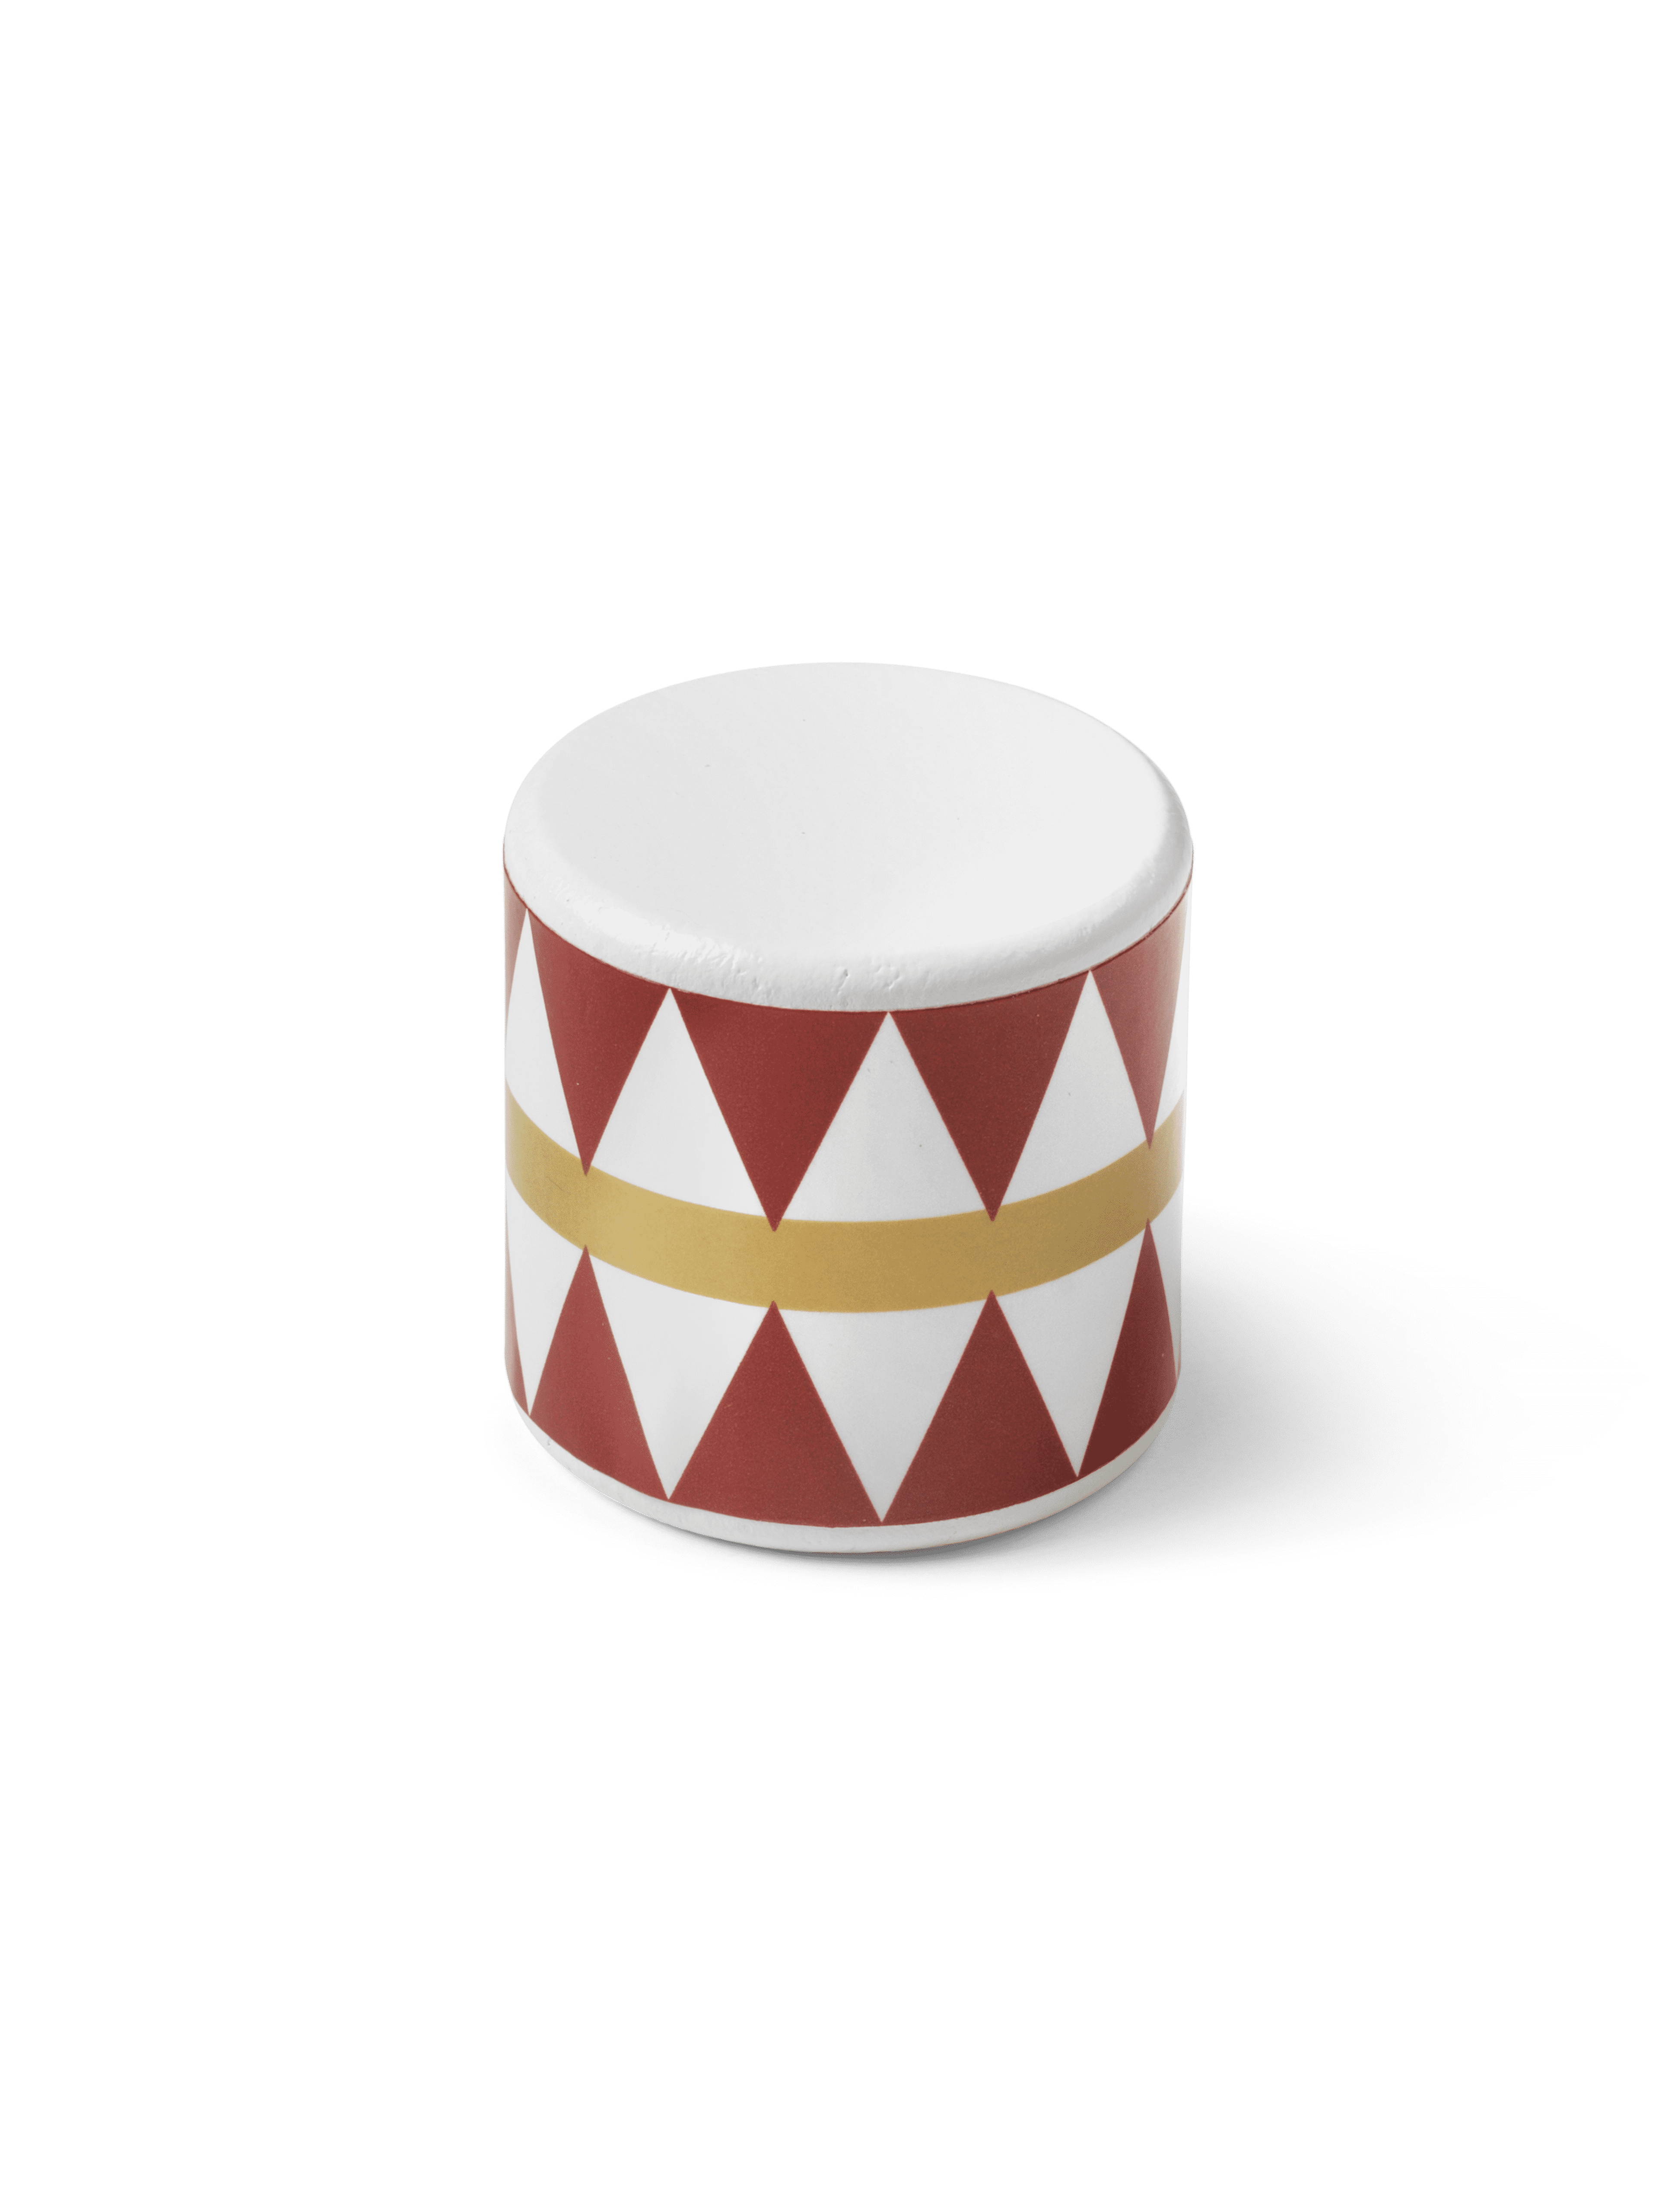 Standard-bearer drum (39024)